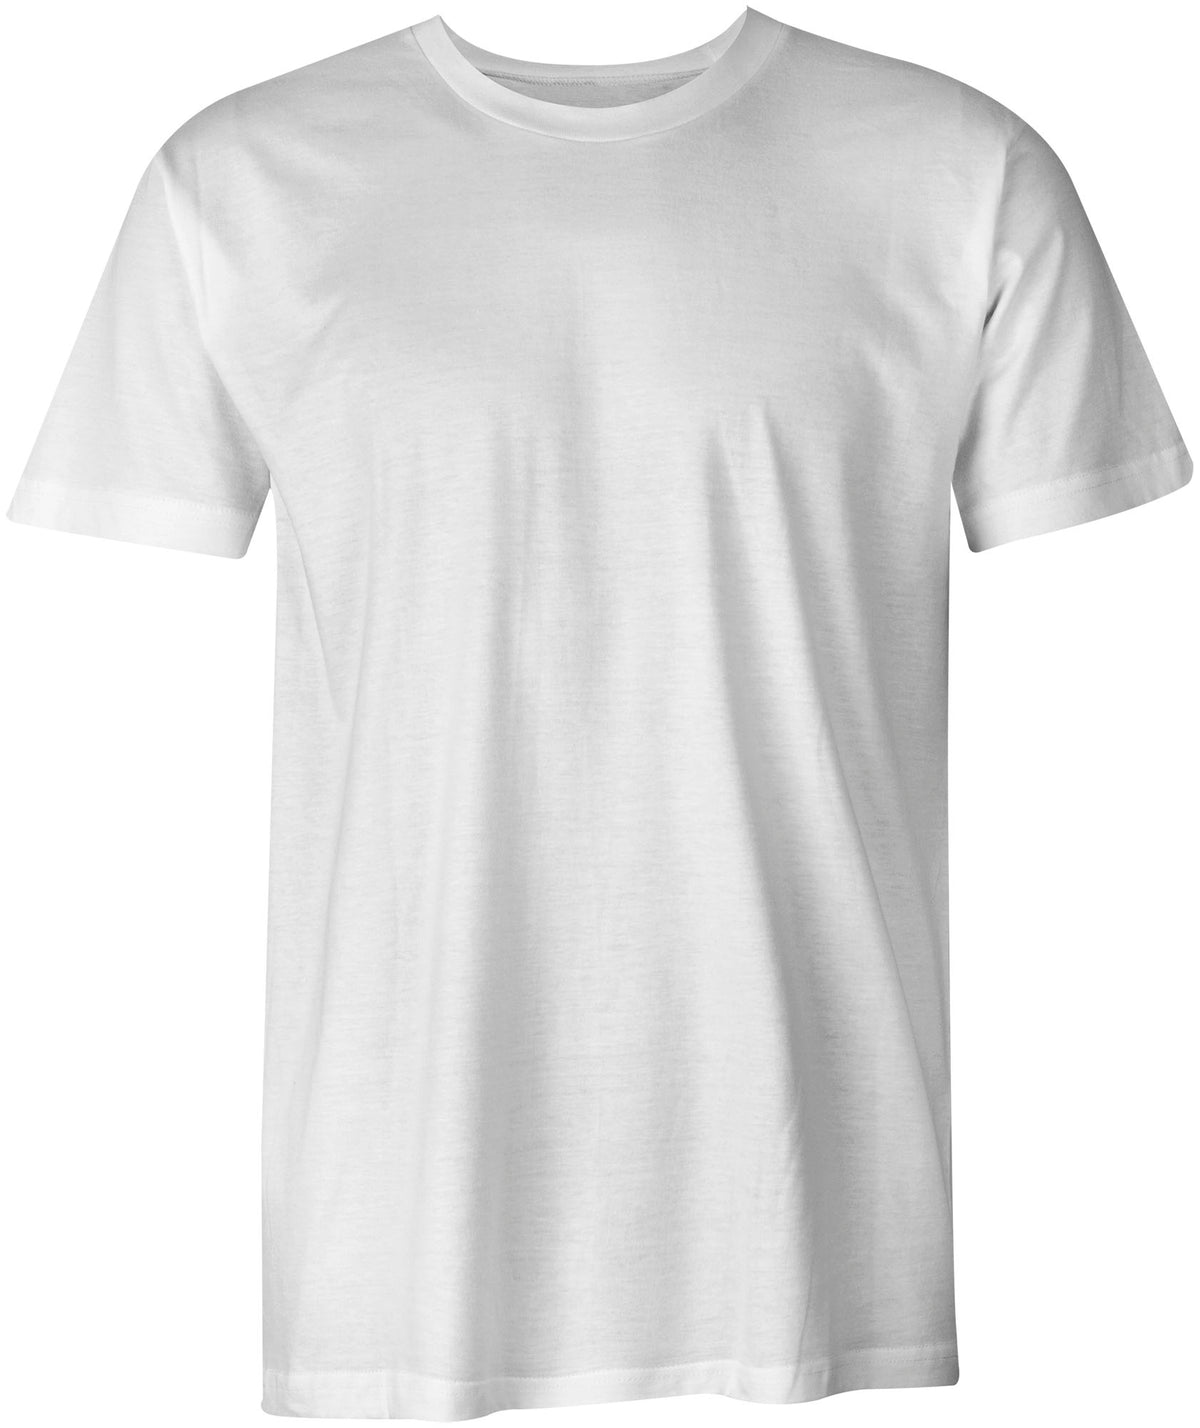 Design Online Double Sided Custom T-Shirt - AS Design Print